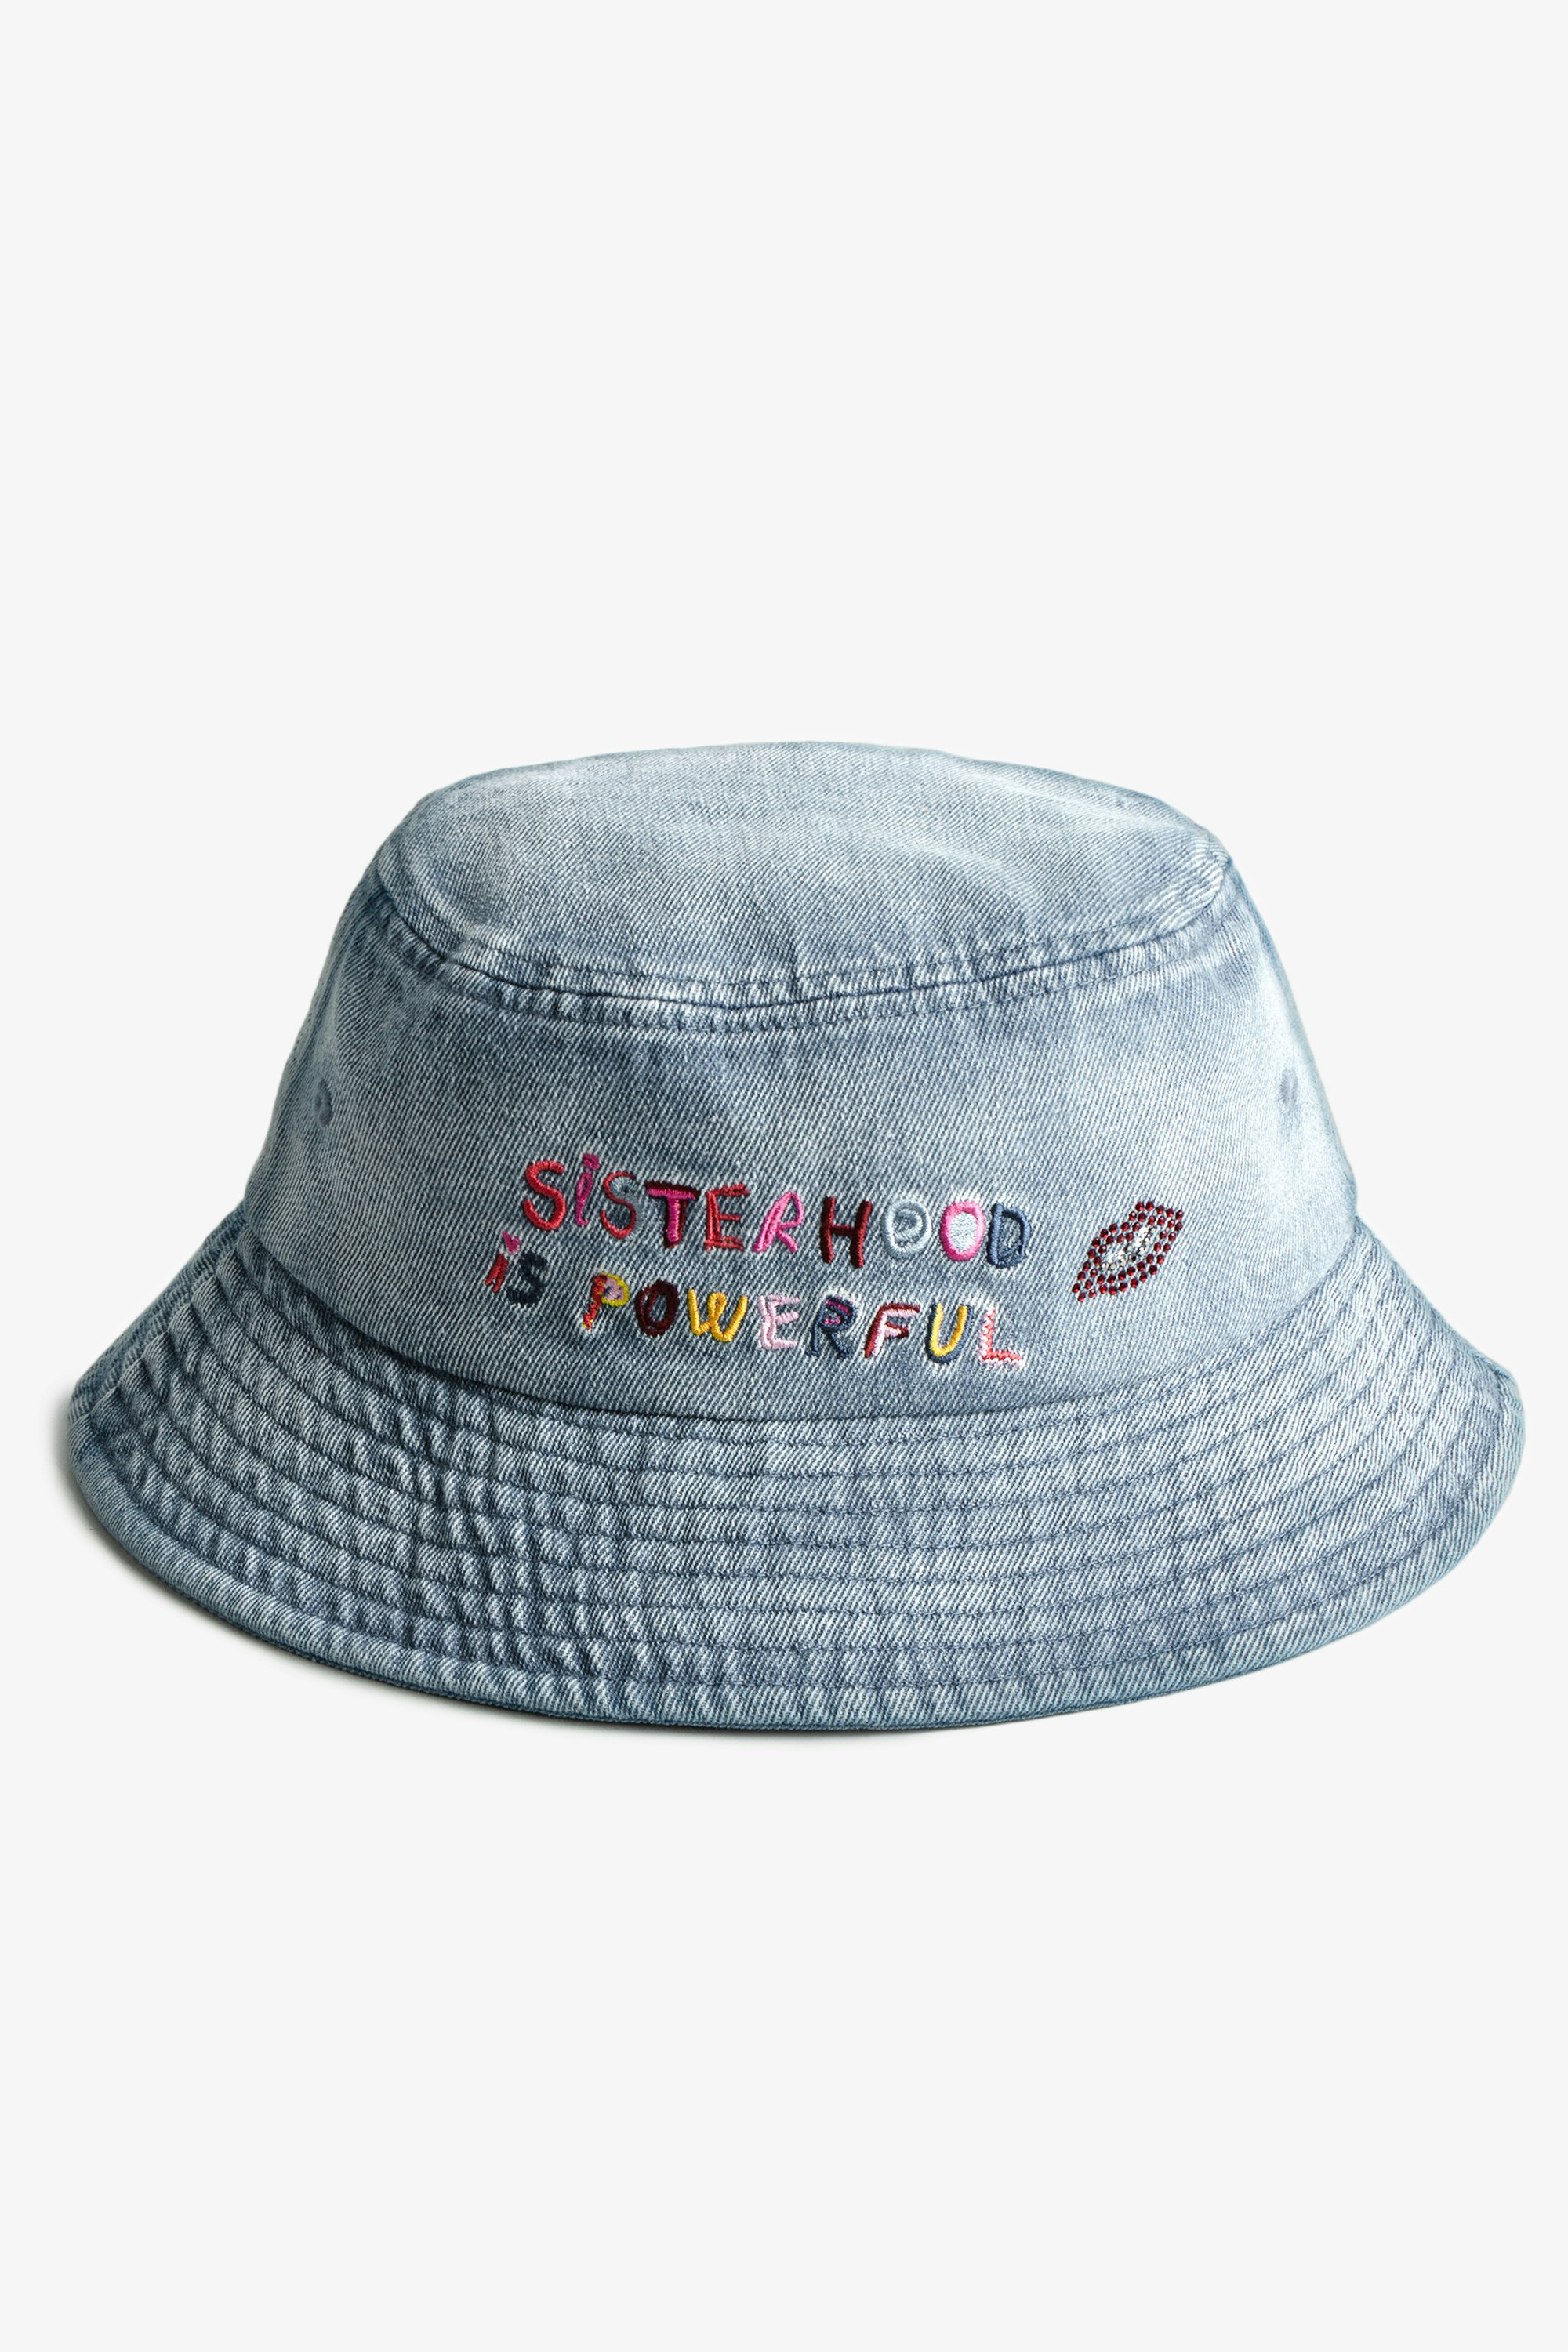 Band of Sisters Bucket Hat Women’s light blue cotton bucket hat with Band of Sisters embroidery